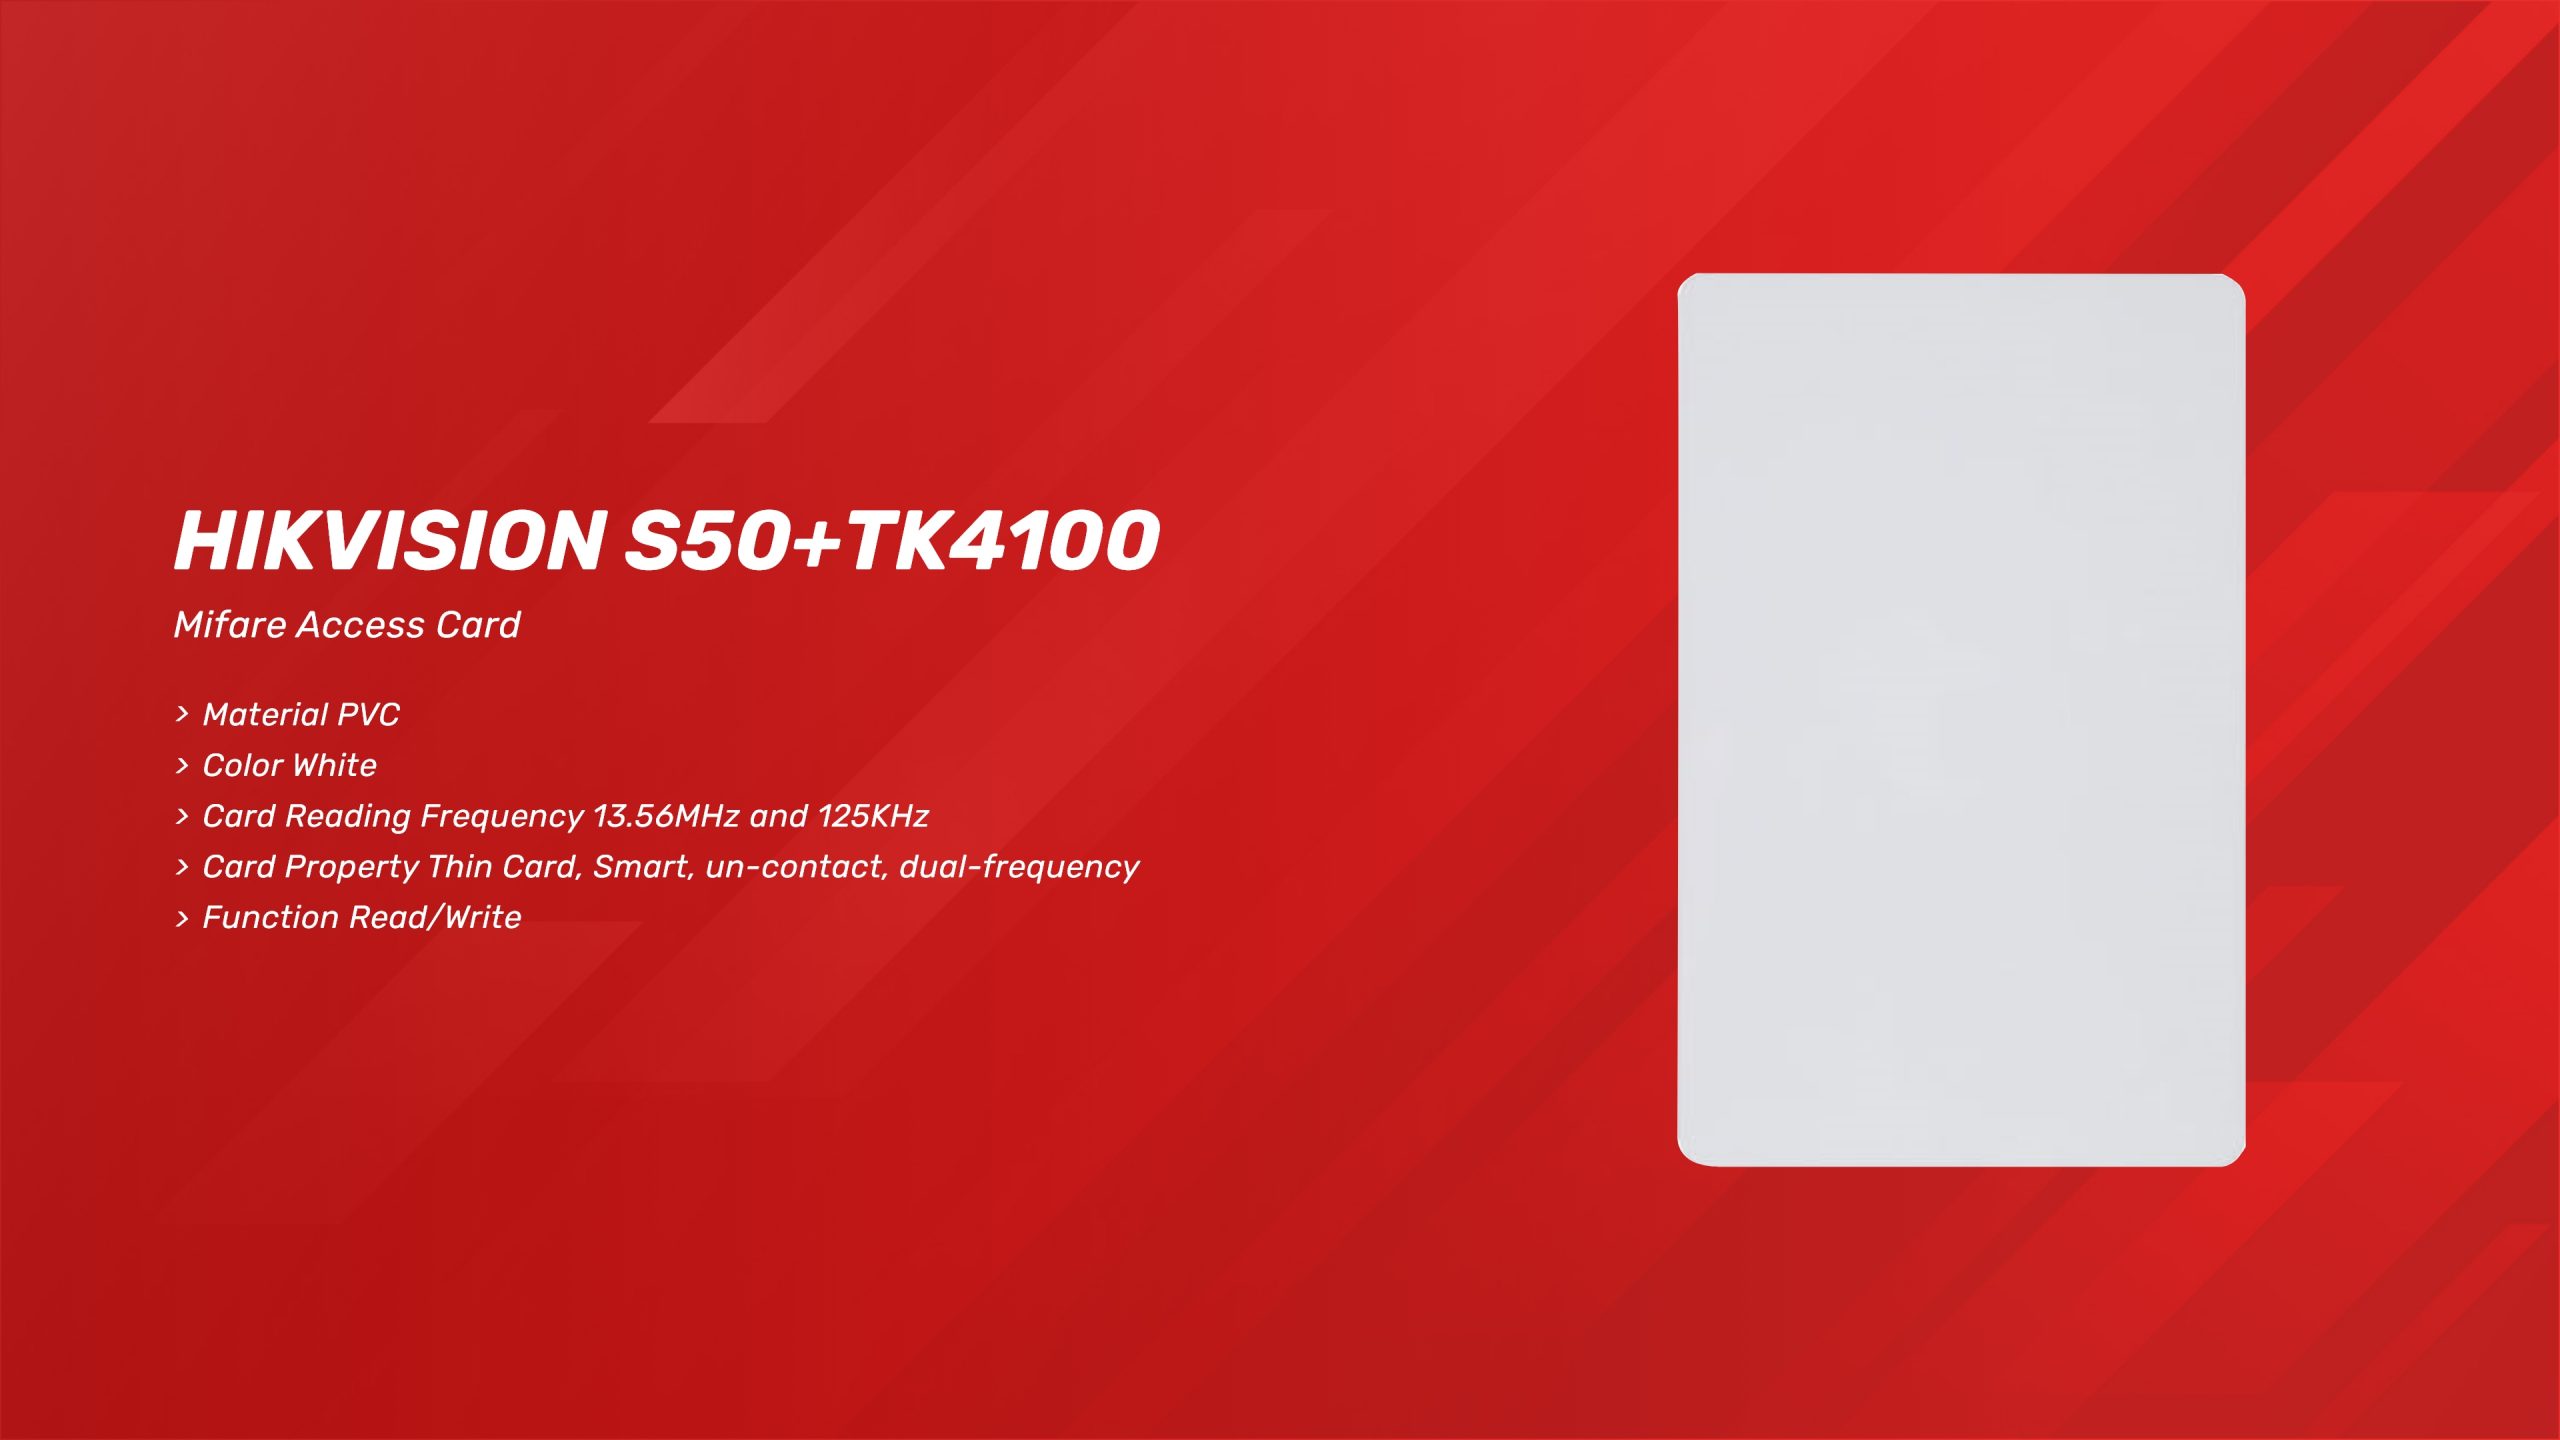 Hikvision S50+TK4100